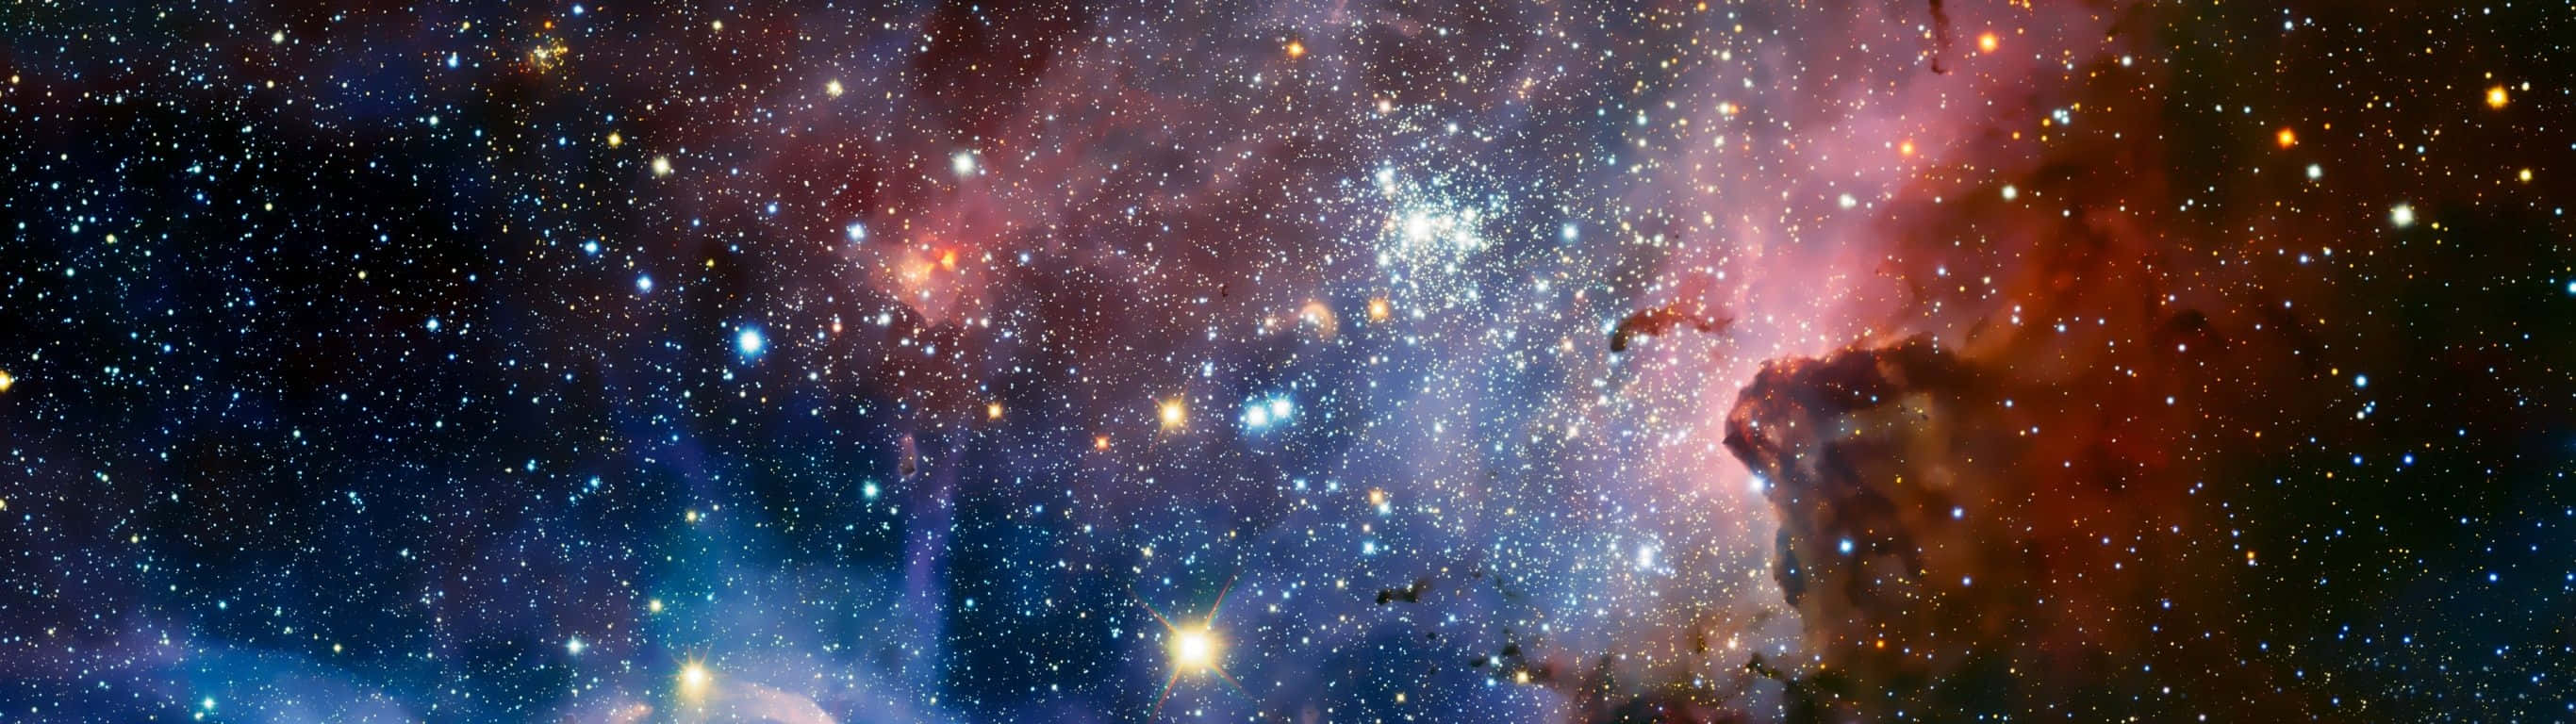 2732 X 768 Colored Galaxy Wallpaper